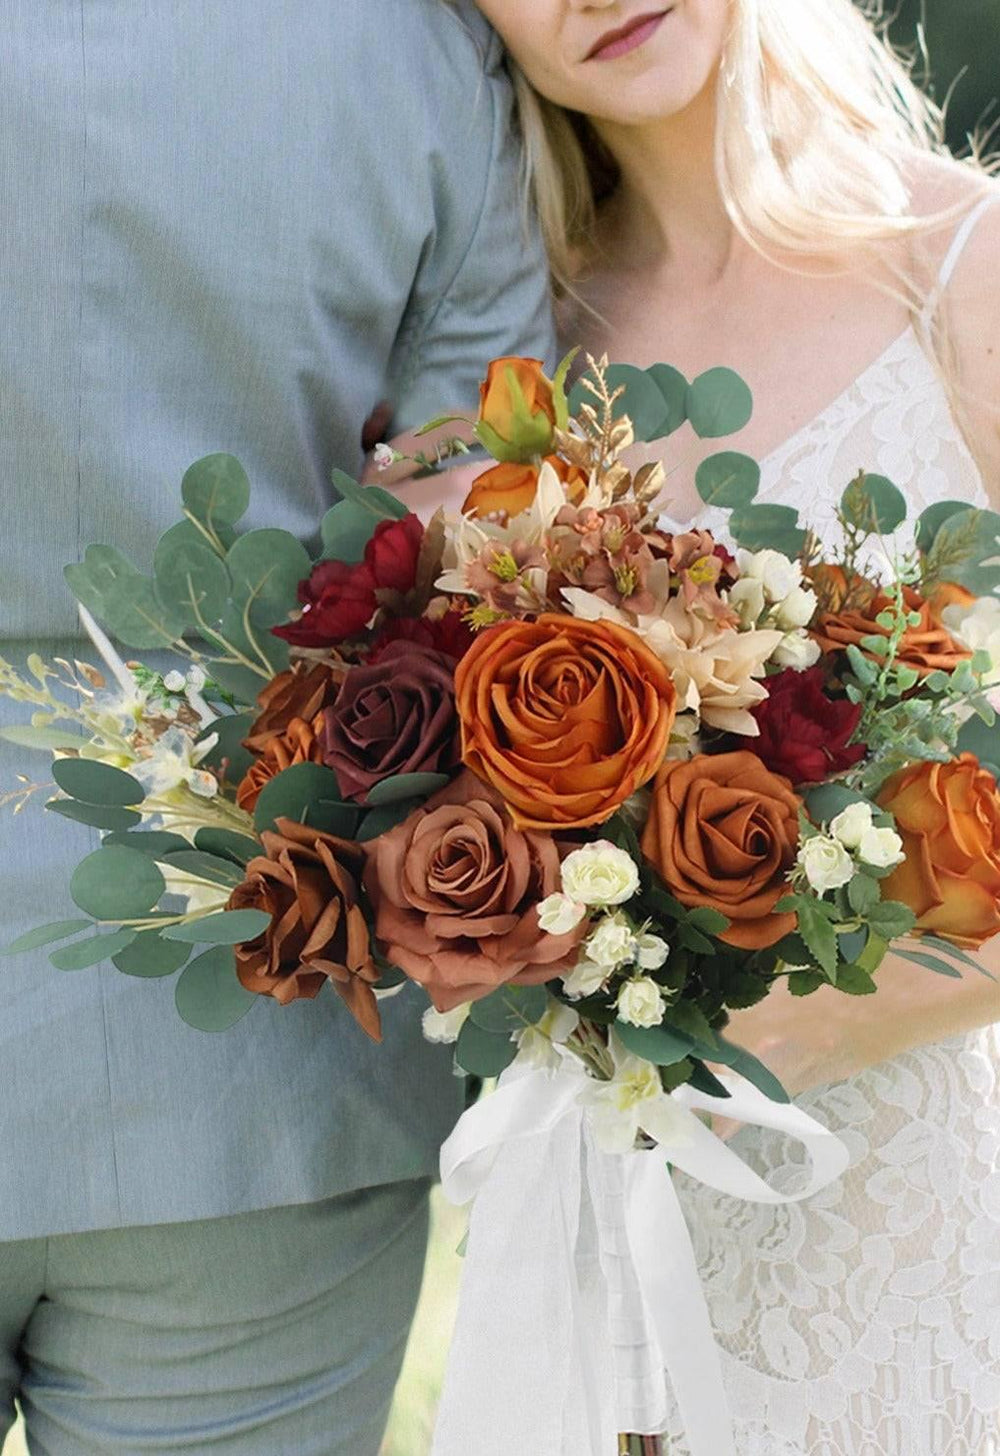 19.6 inch wide Terracotta Freeform Bridal Bouquet - Rinlong Flower